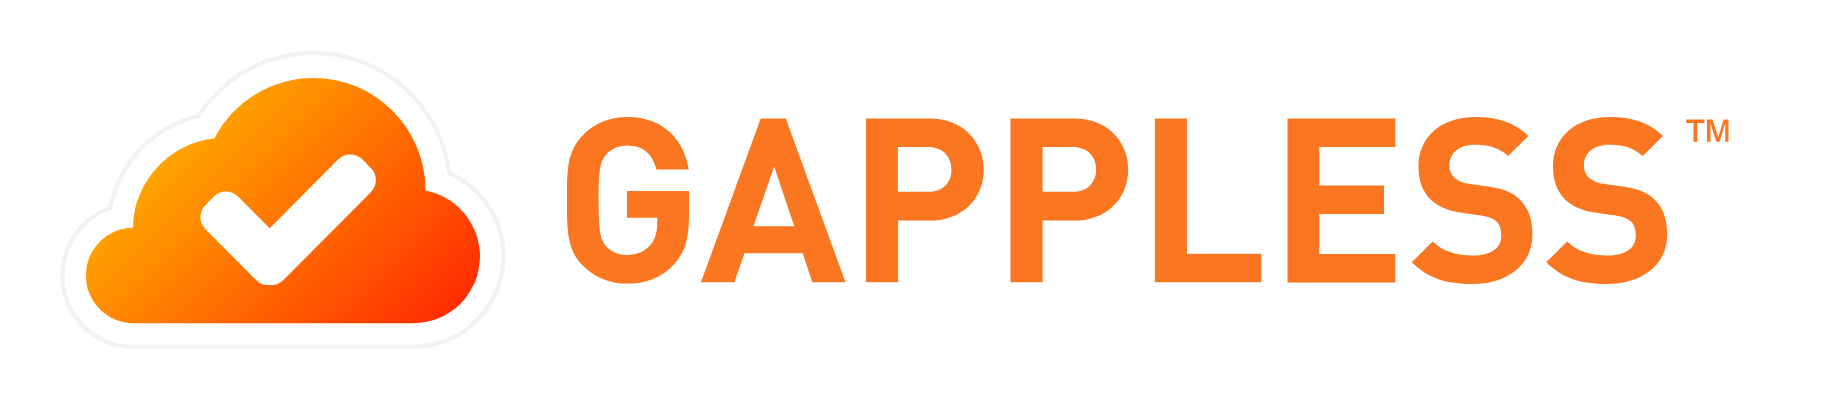 Gappless logo